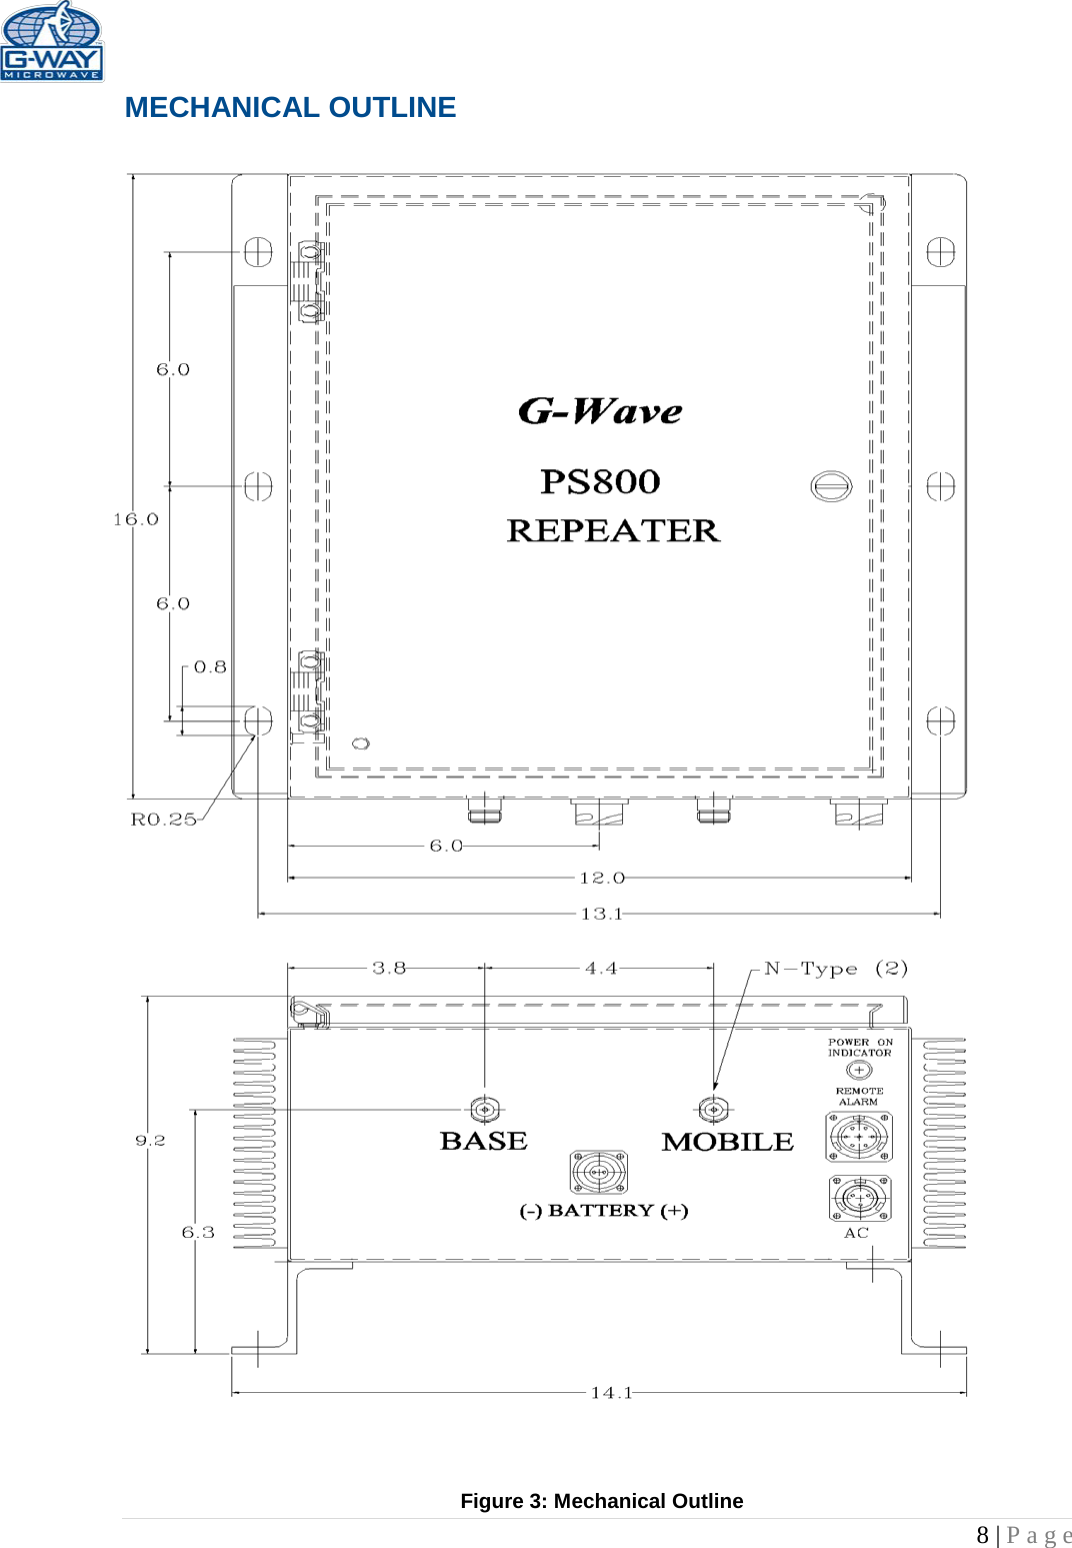   8 | Page  MECHANICAL OUTLINE                                                         Figure 3: Mechanical Outline 